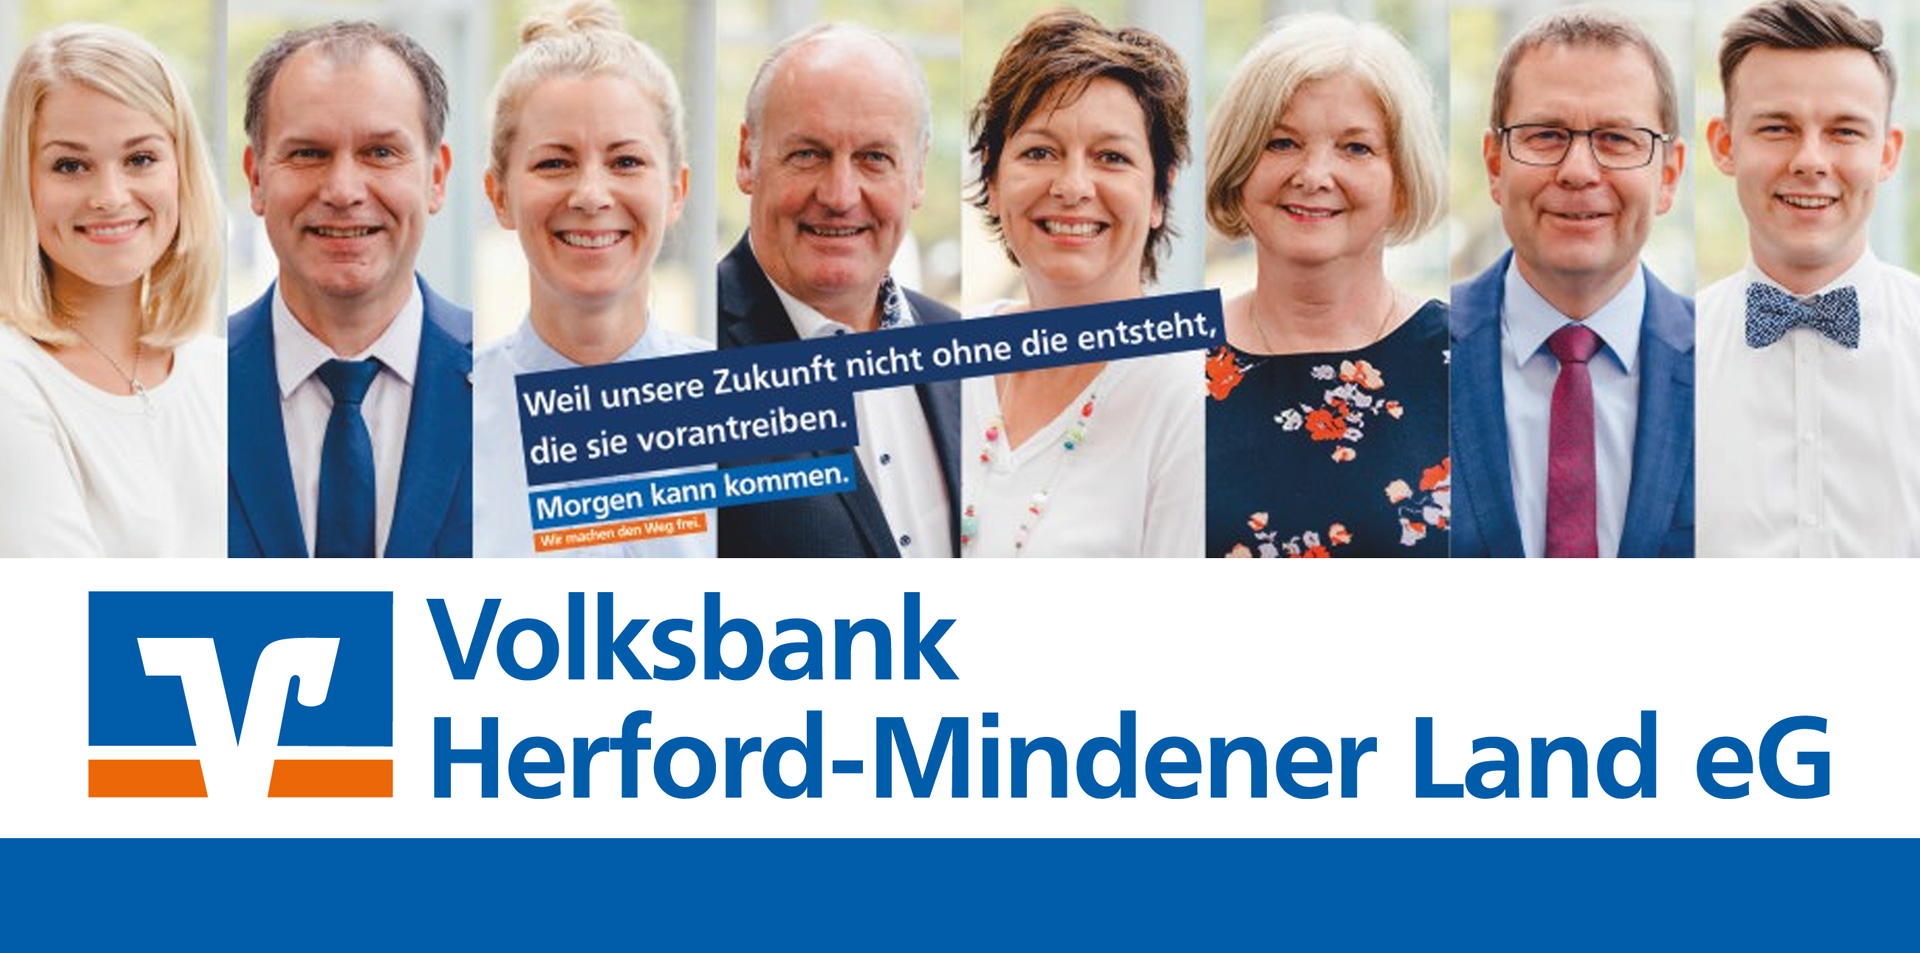 Volksbank Bad Oeynhausen-Herford